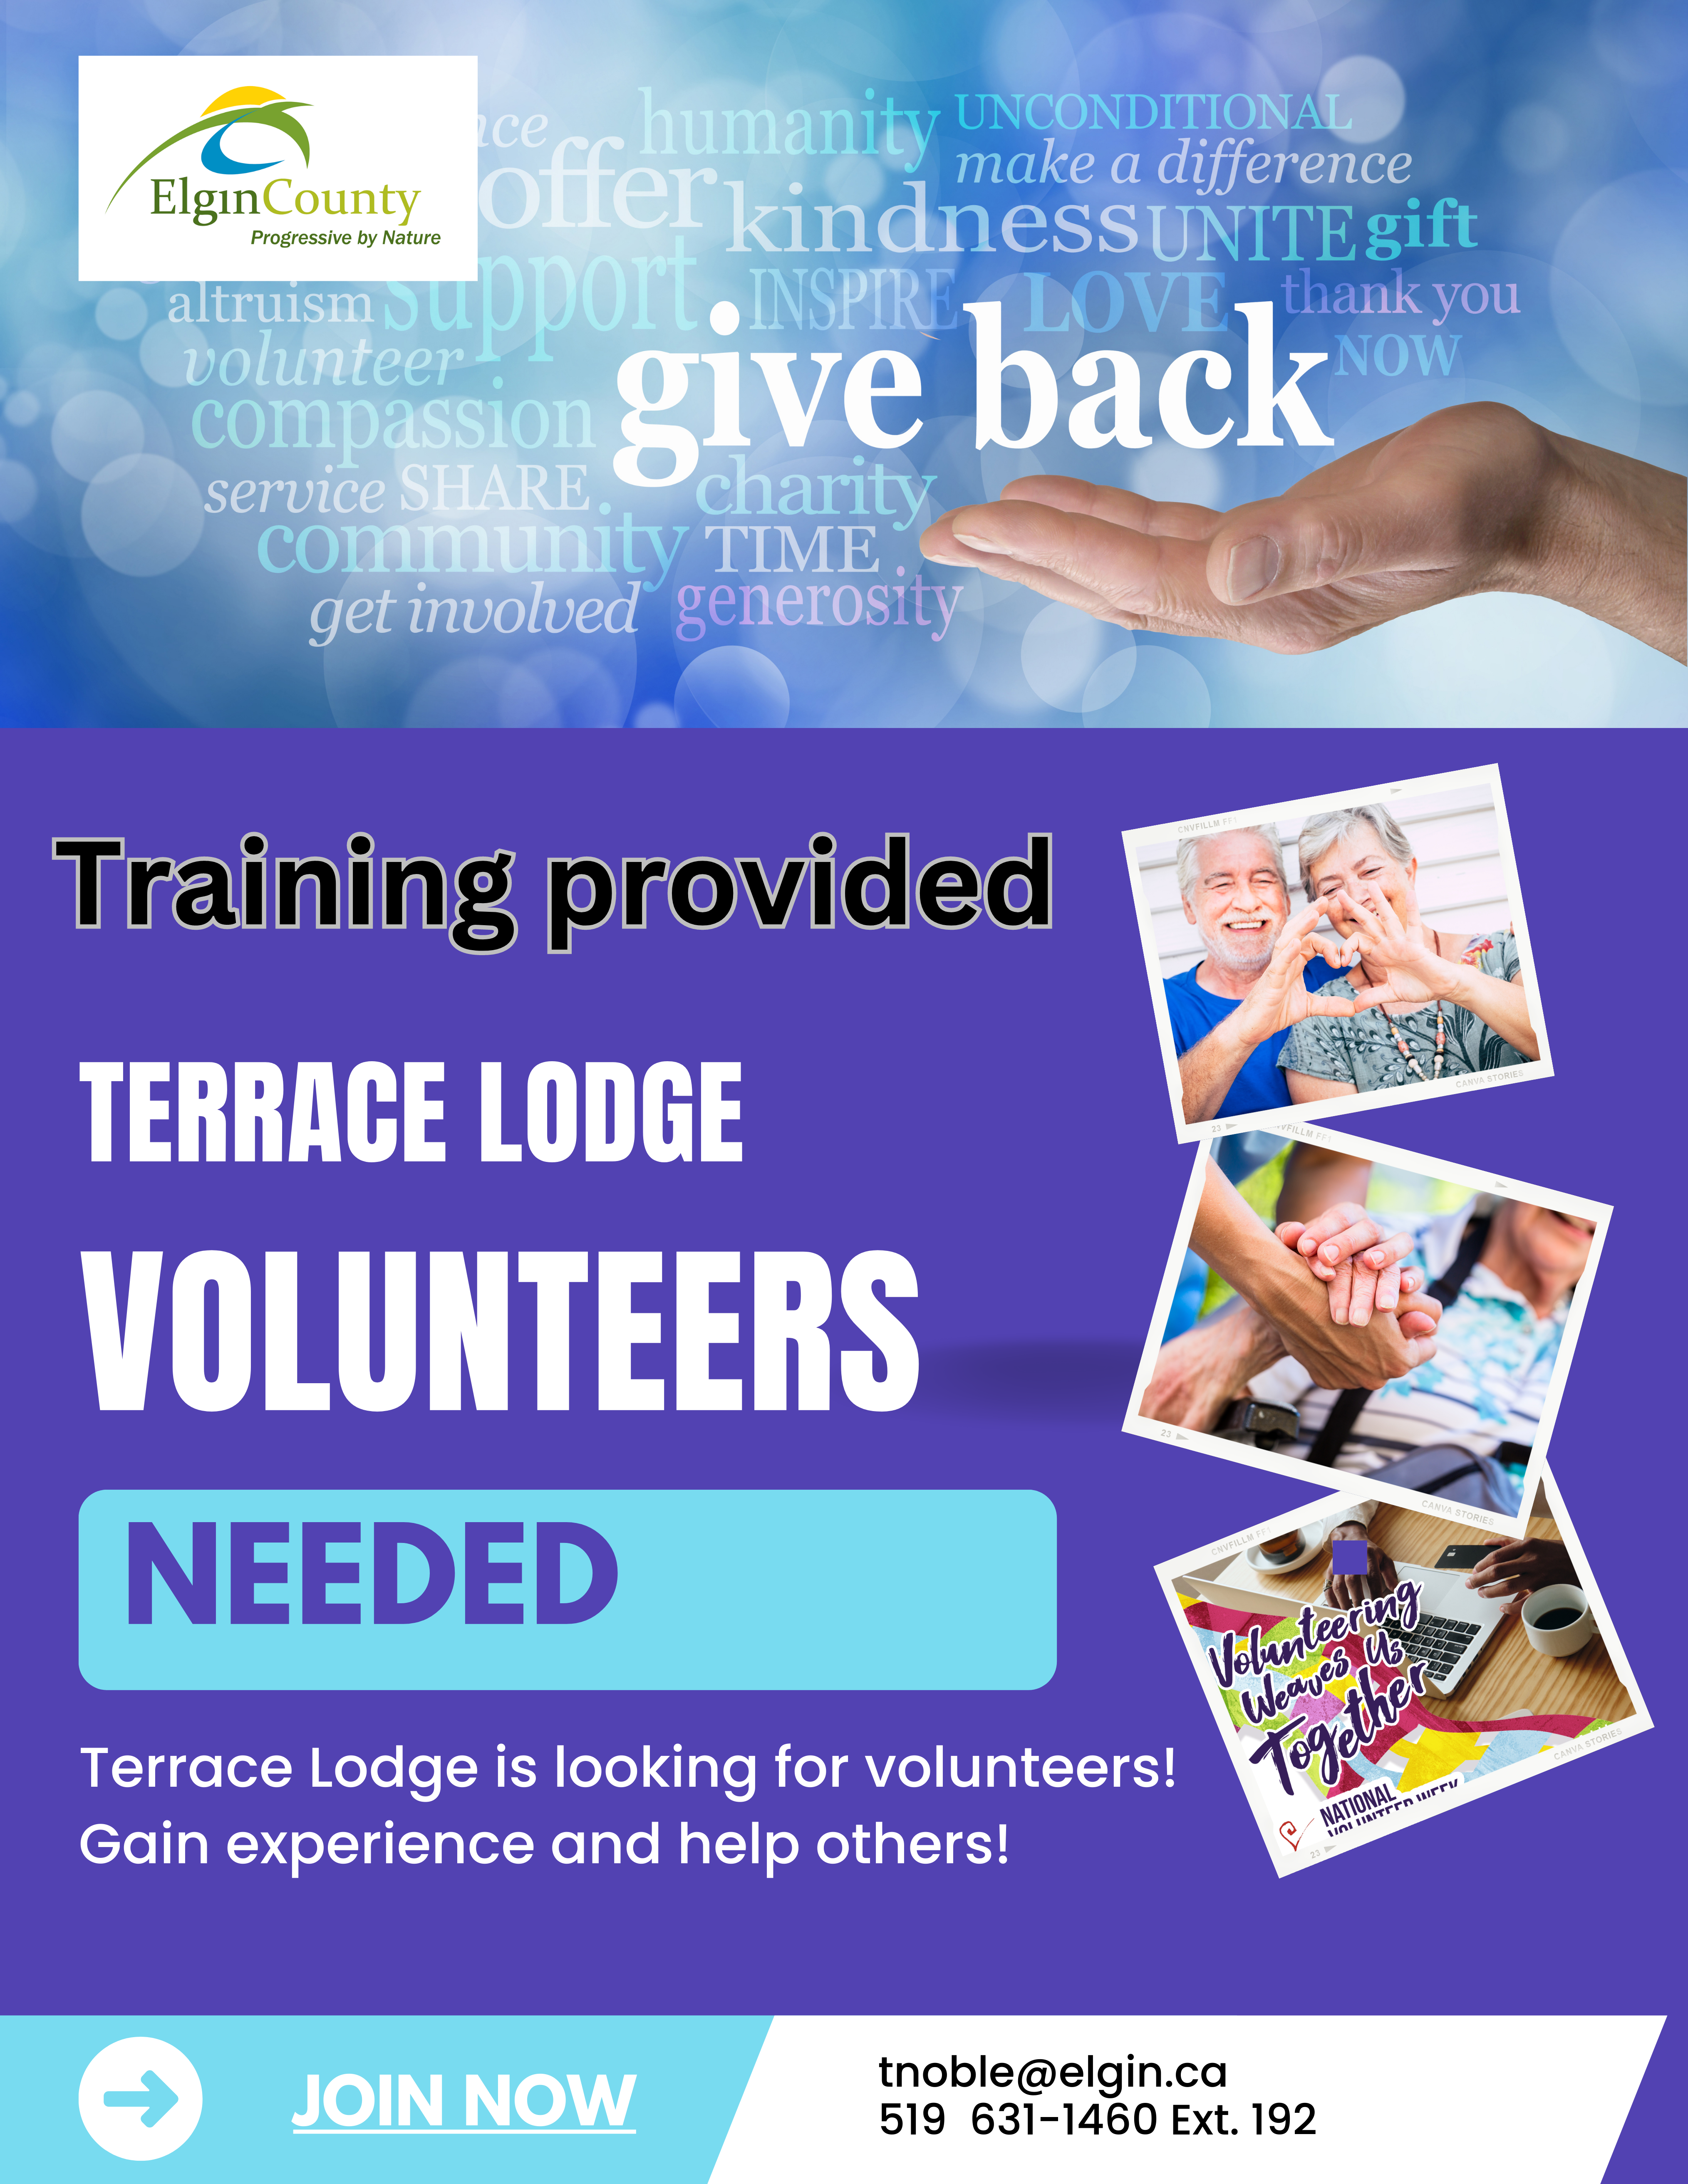 Volunteer recruitment poster for Terrace Lodge